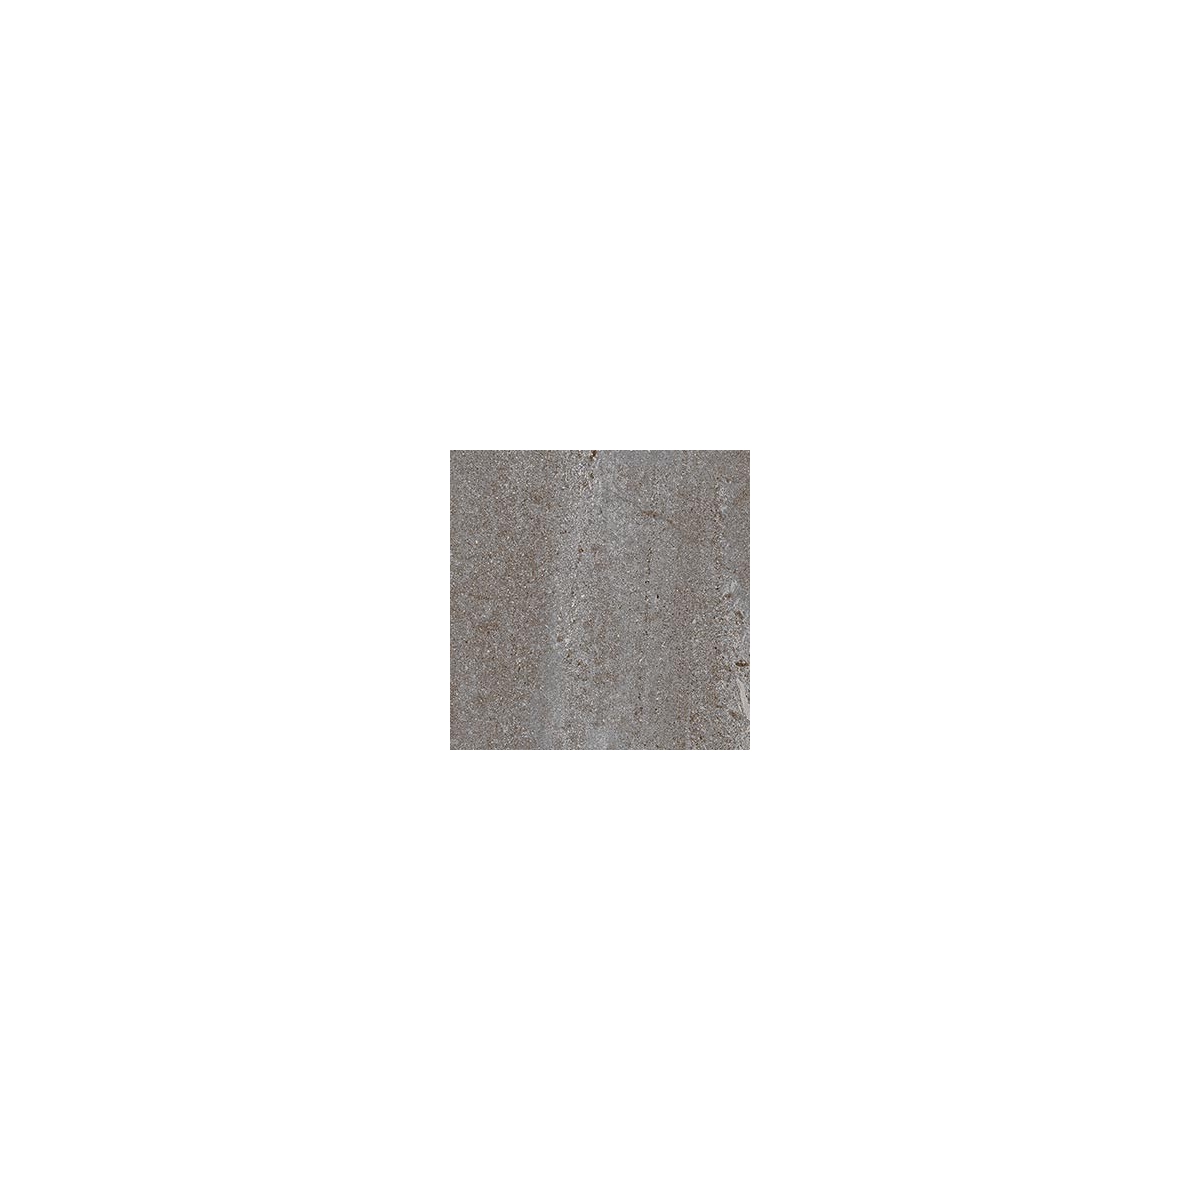 Corneille Cemento 15x15 (m2) - Pavimento hidráulico en gres porcelánico